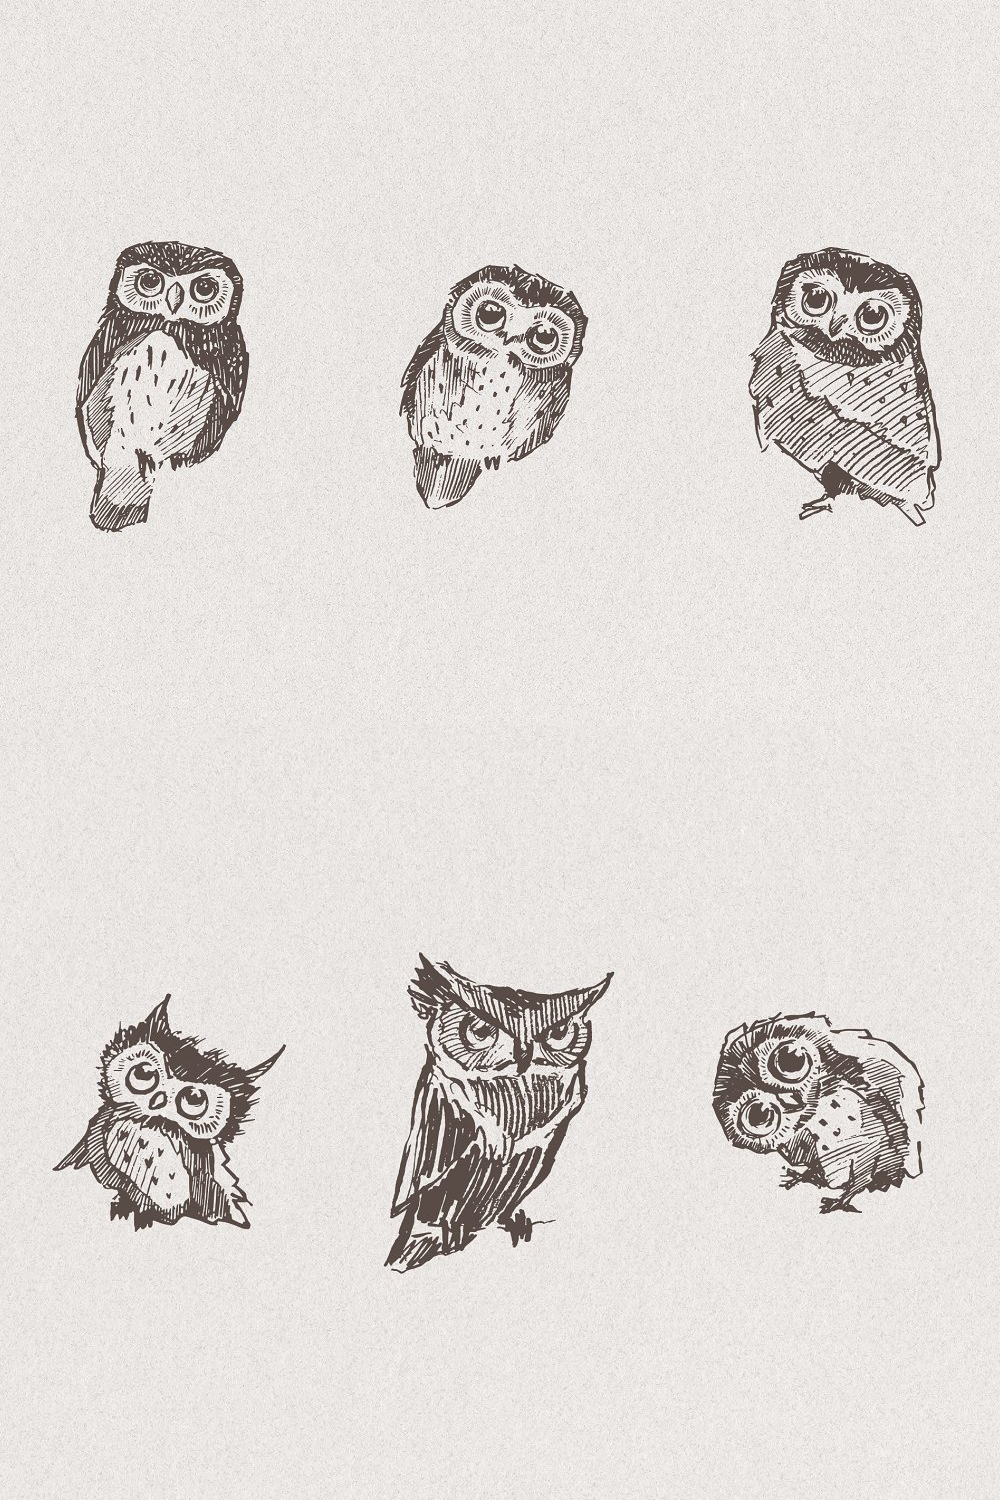 Illustrations set of owl illustrations pinterest.